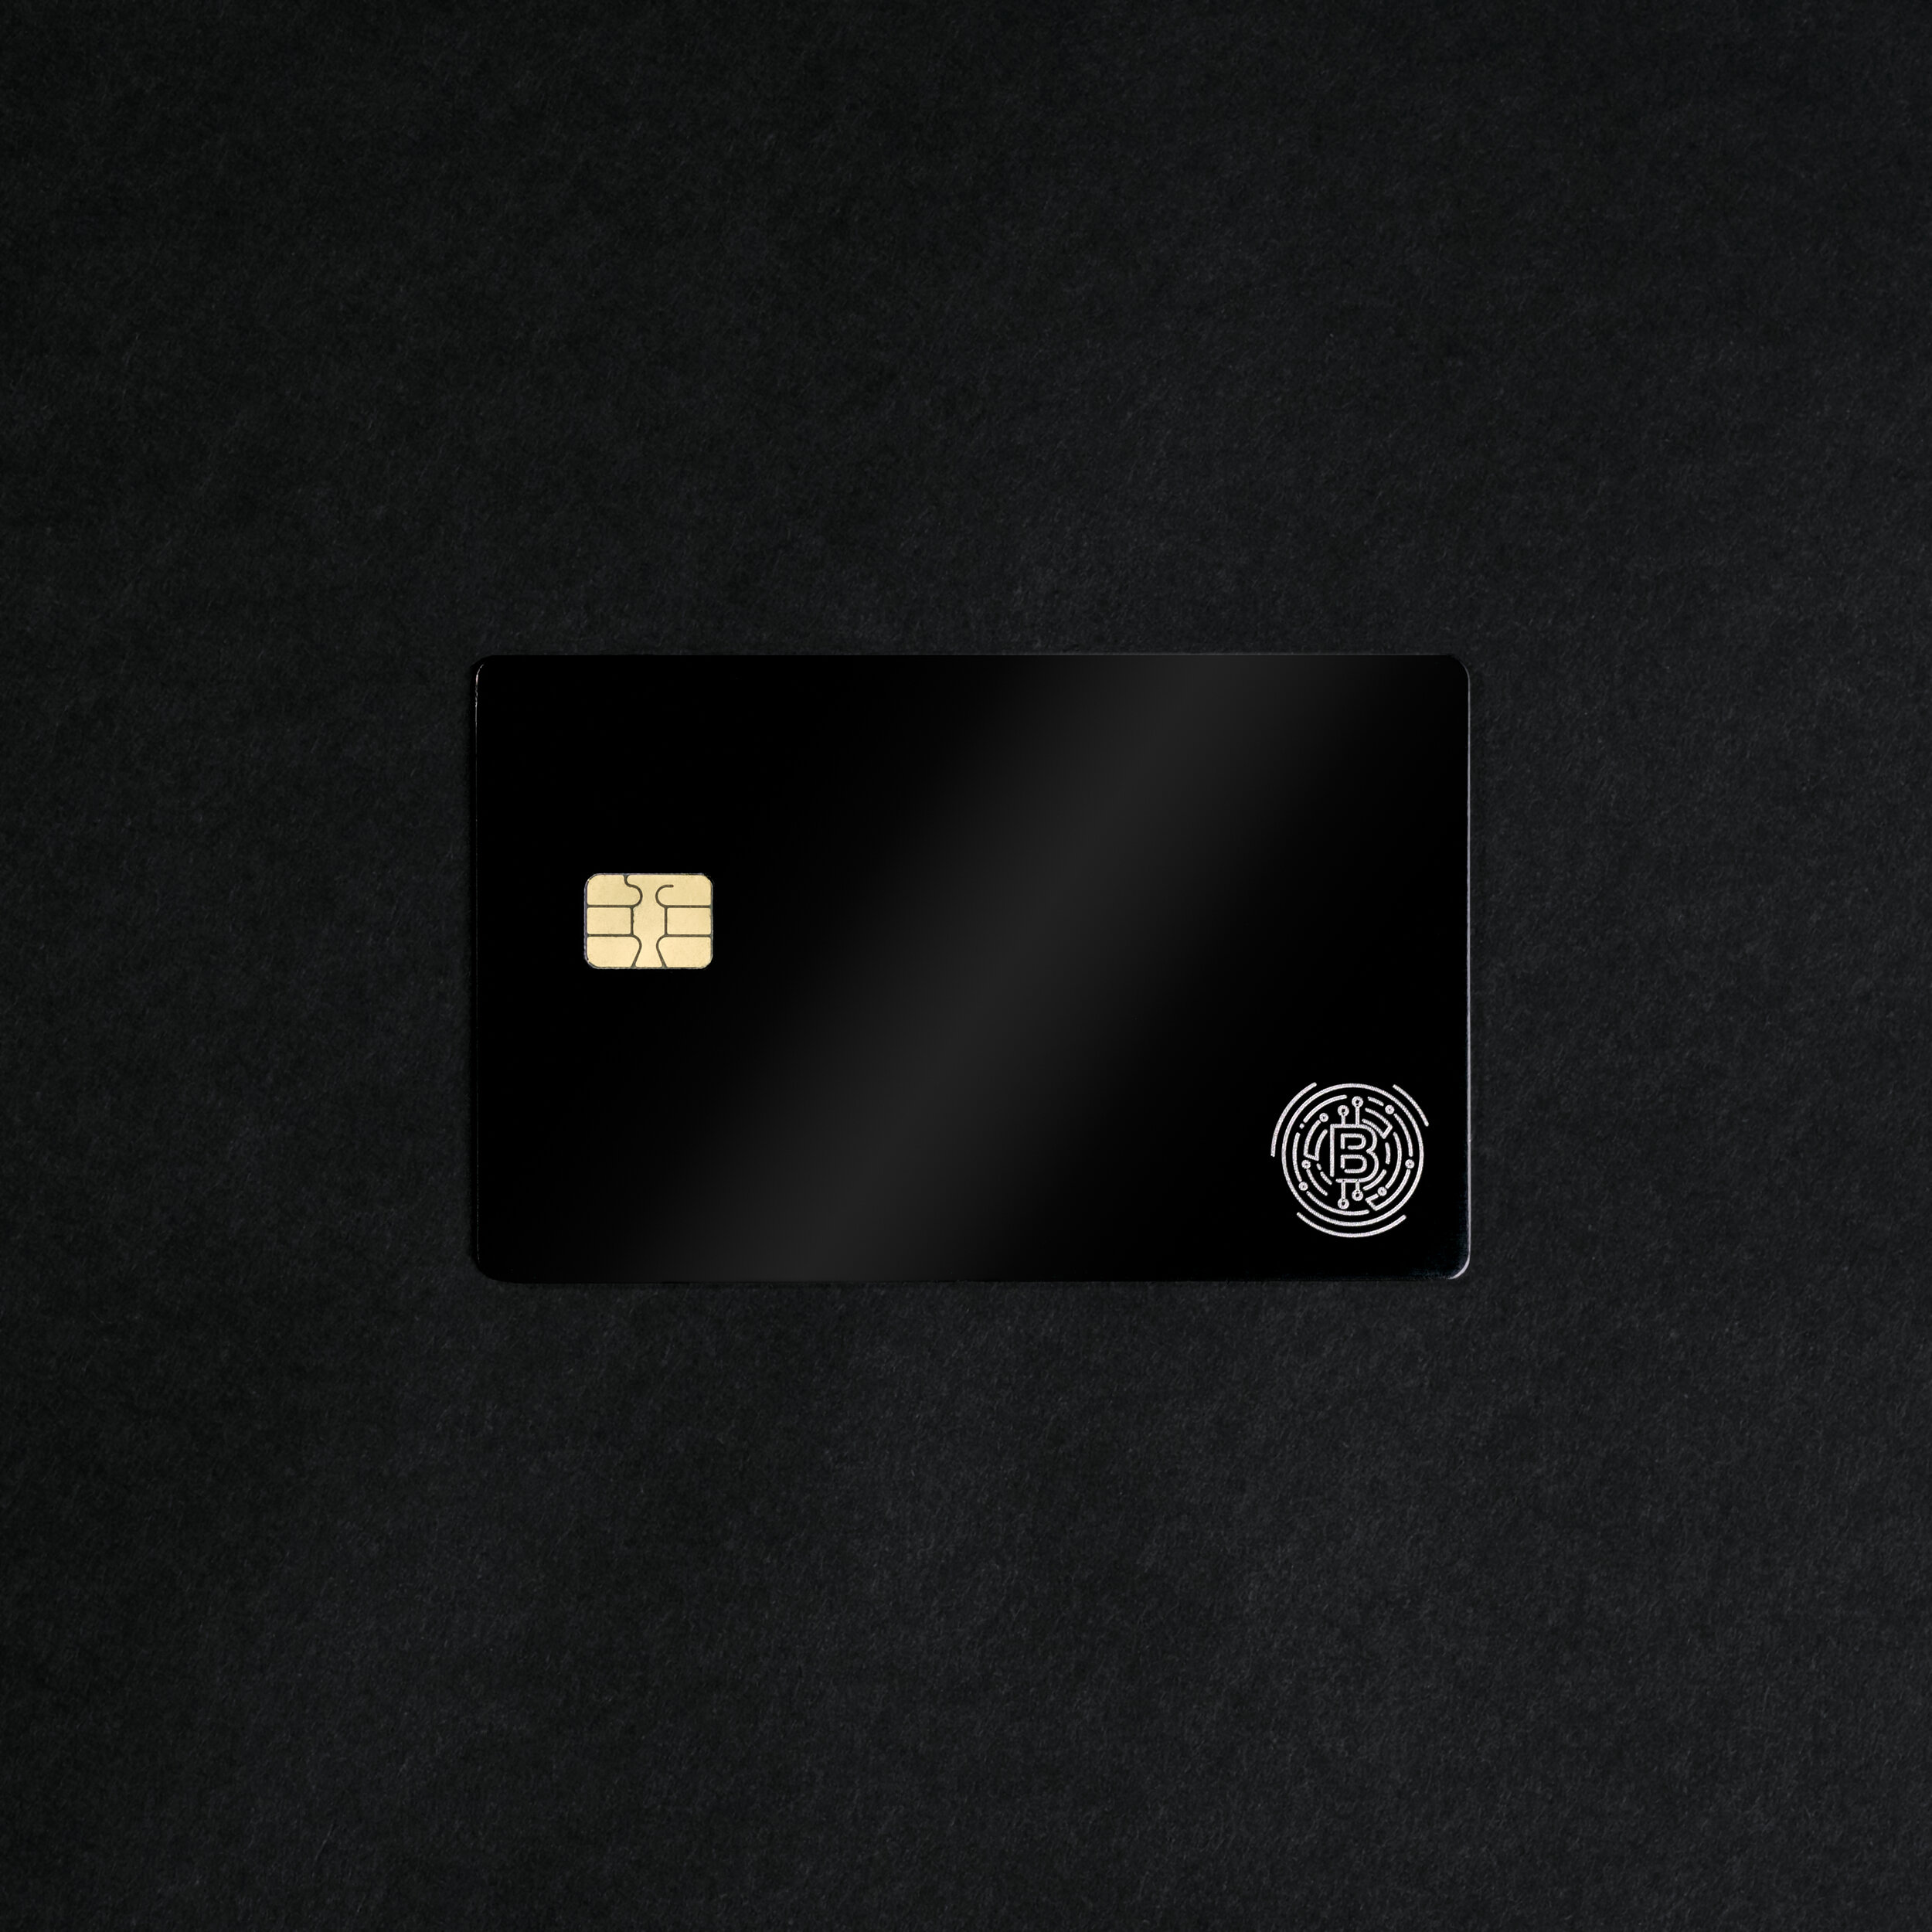 2021-6-3 Debit Cards0009 1 1.jpg